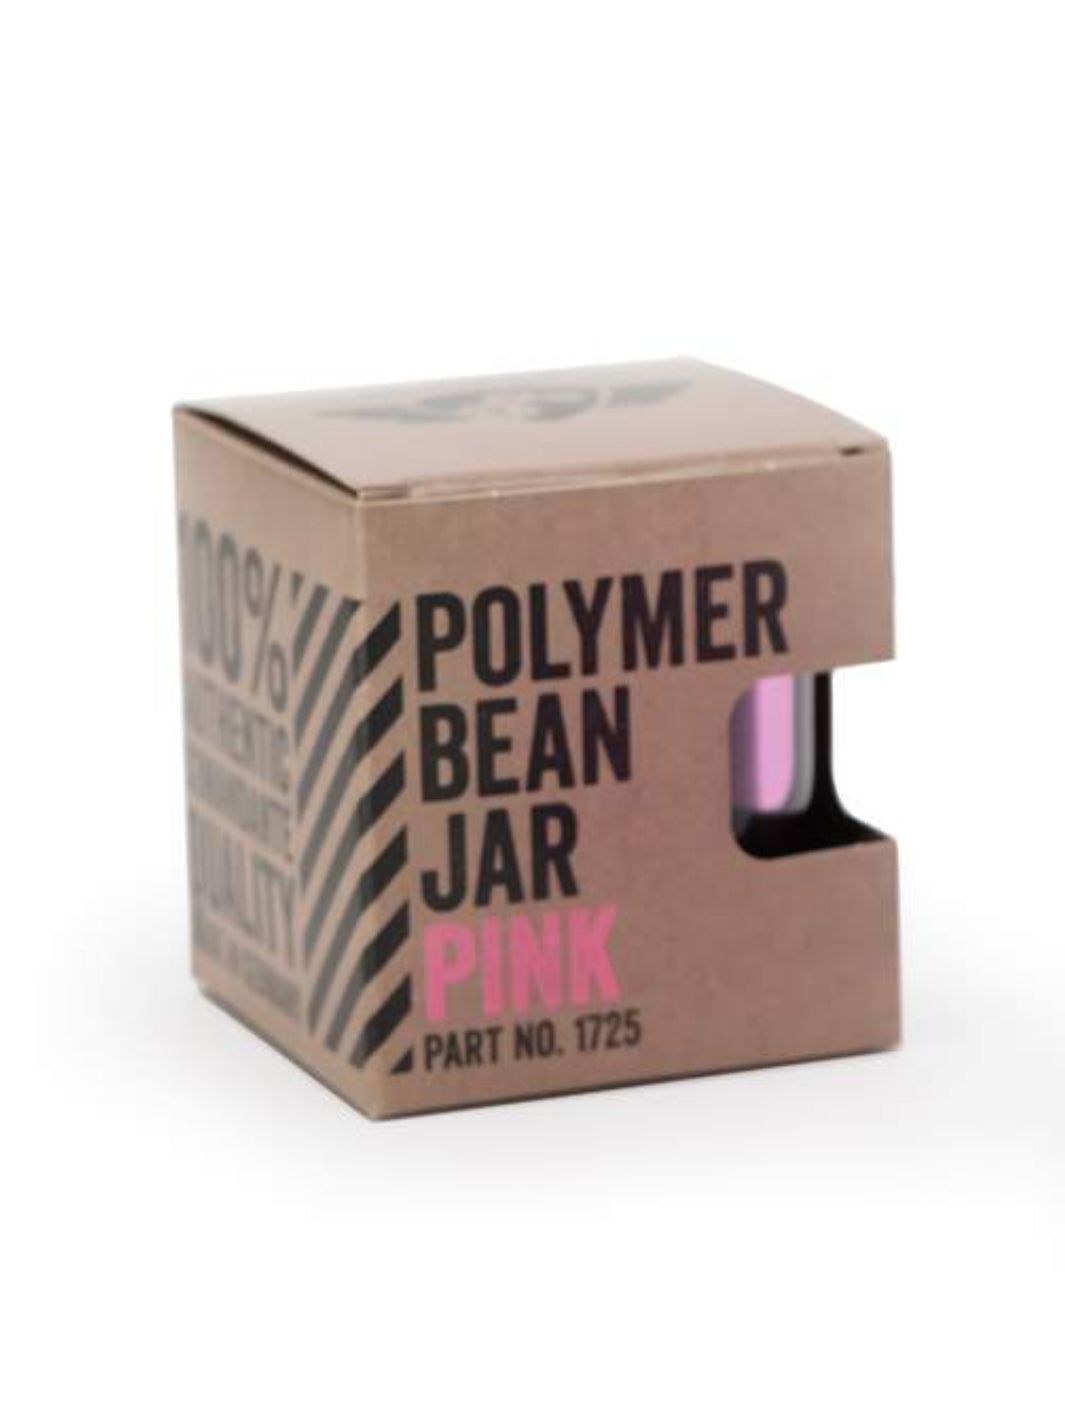 COMANDANTE Polymer Bean Jar